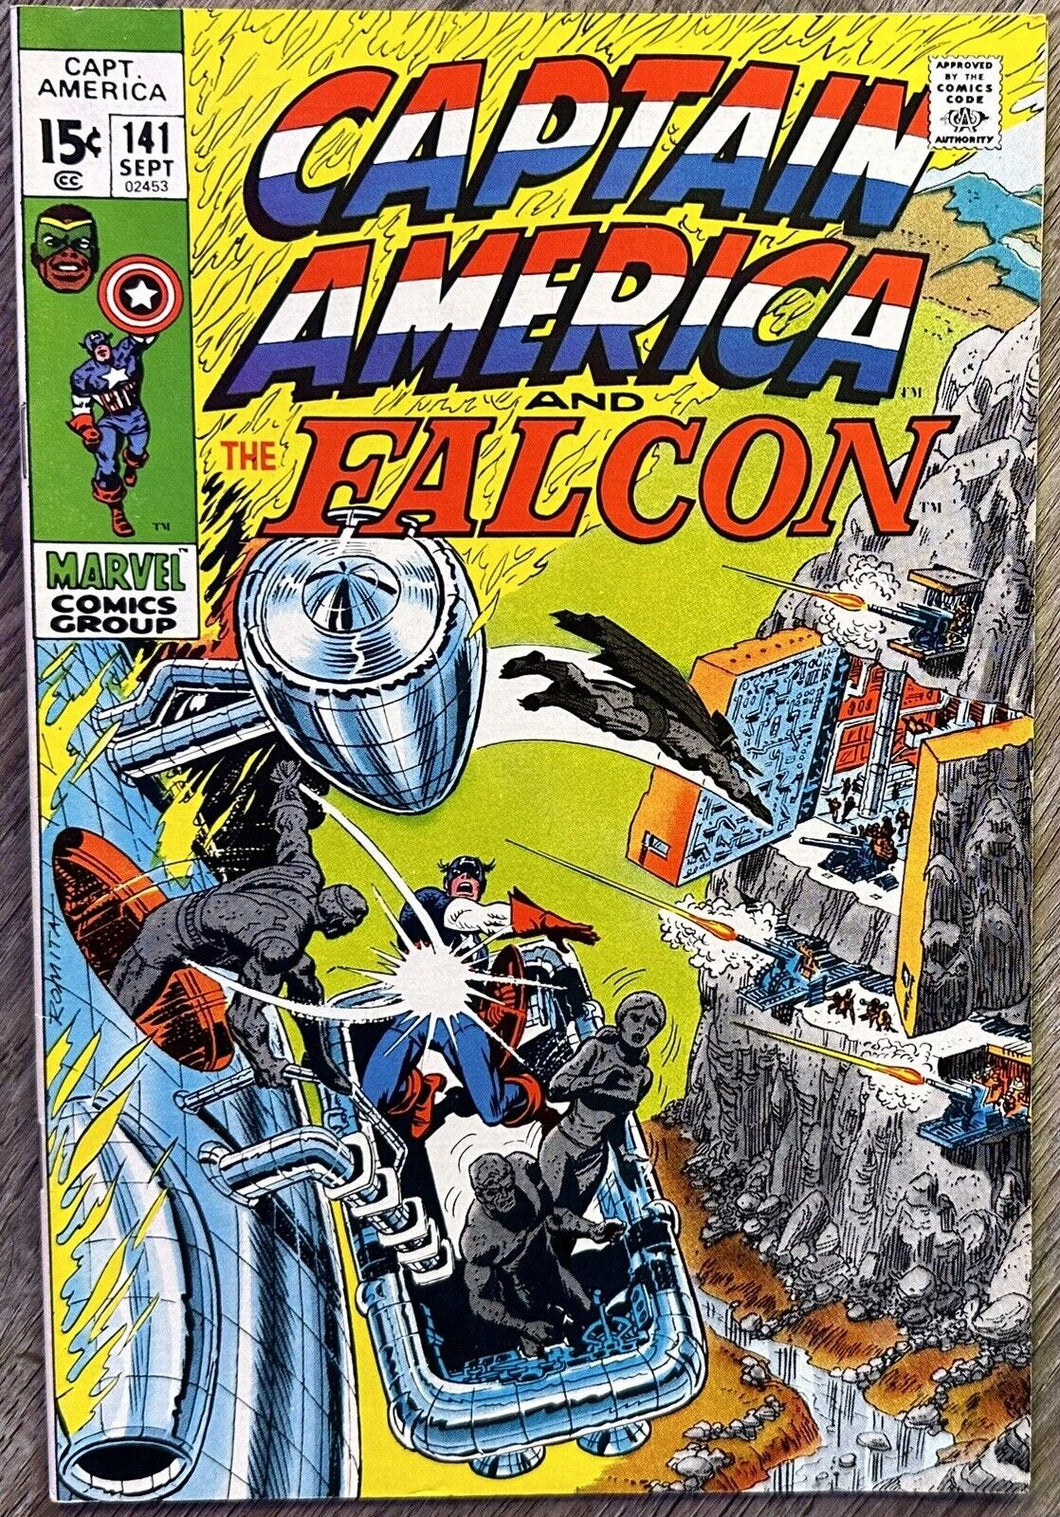 CAPTAIN AMERICA #141 (MARVEL,1971) Last Captain America story by Stan Lee